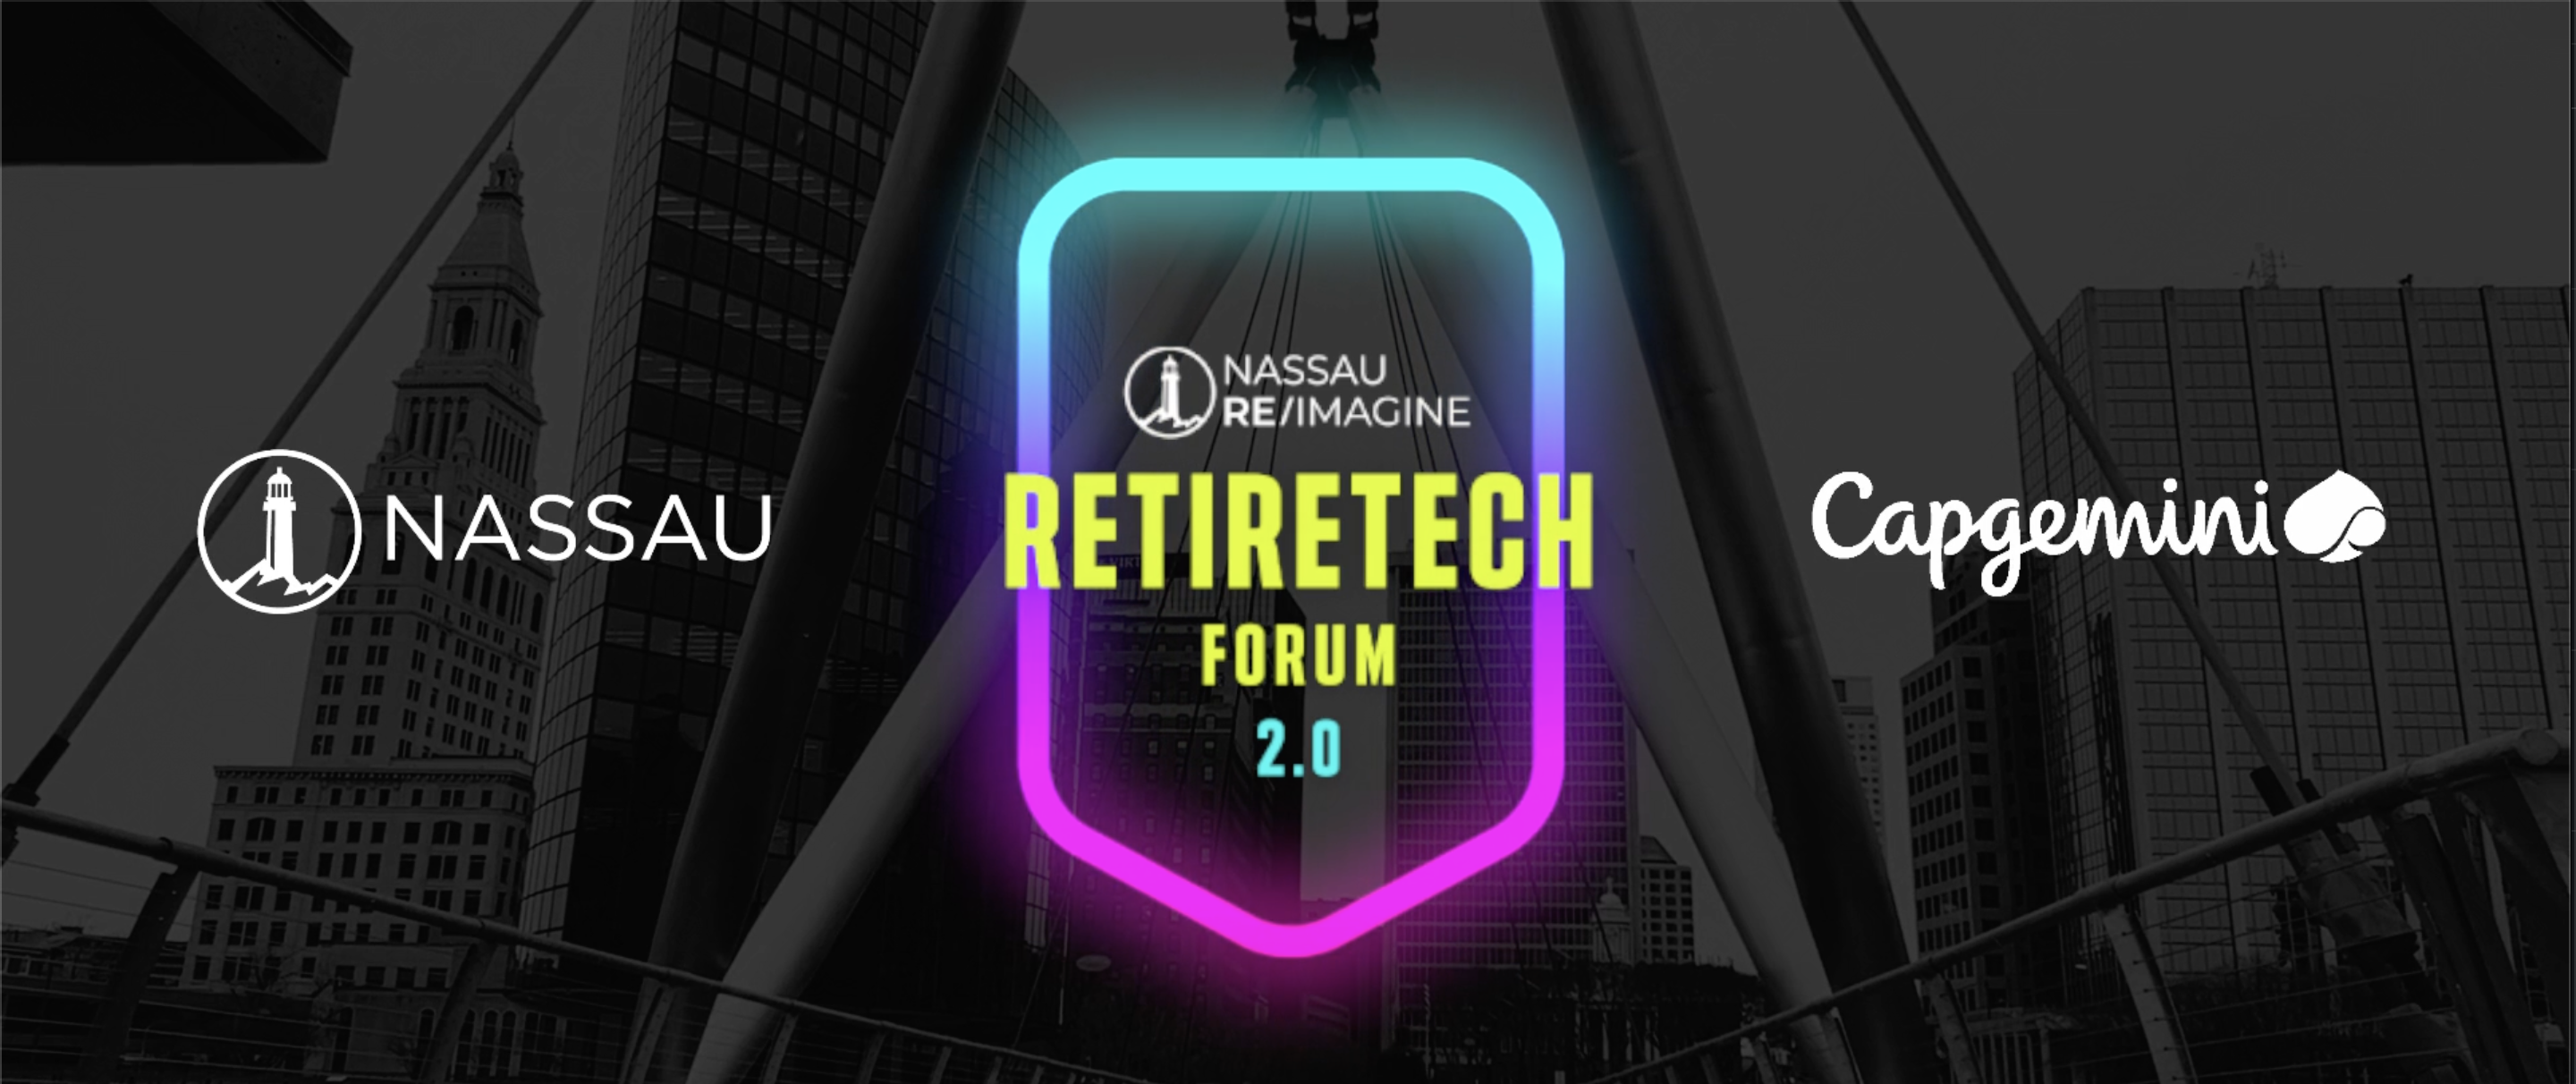 Nassau Re/Imagine Retiretech Forum 2.0